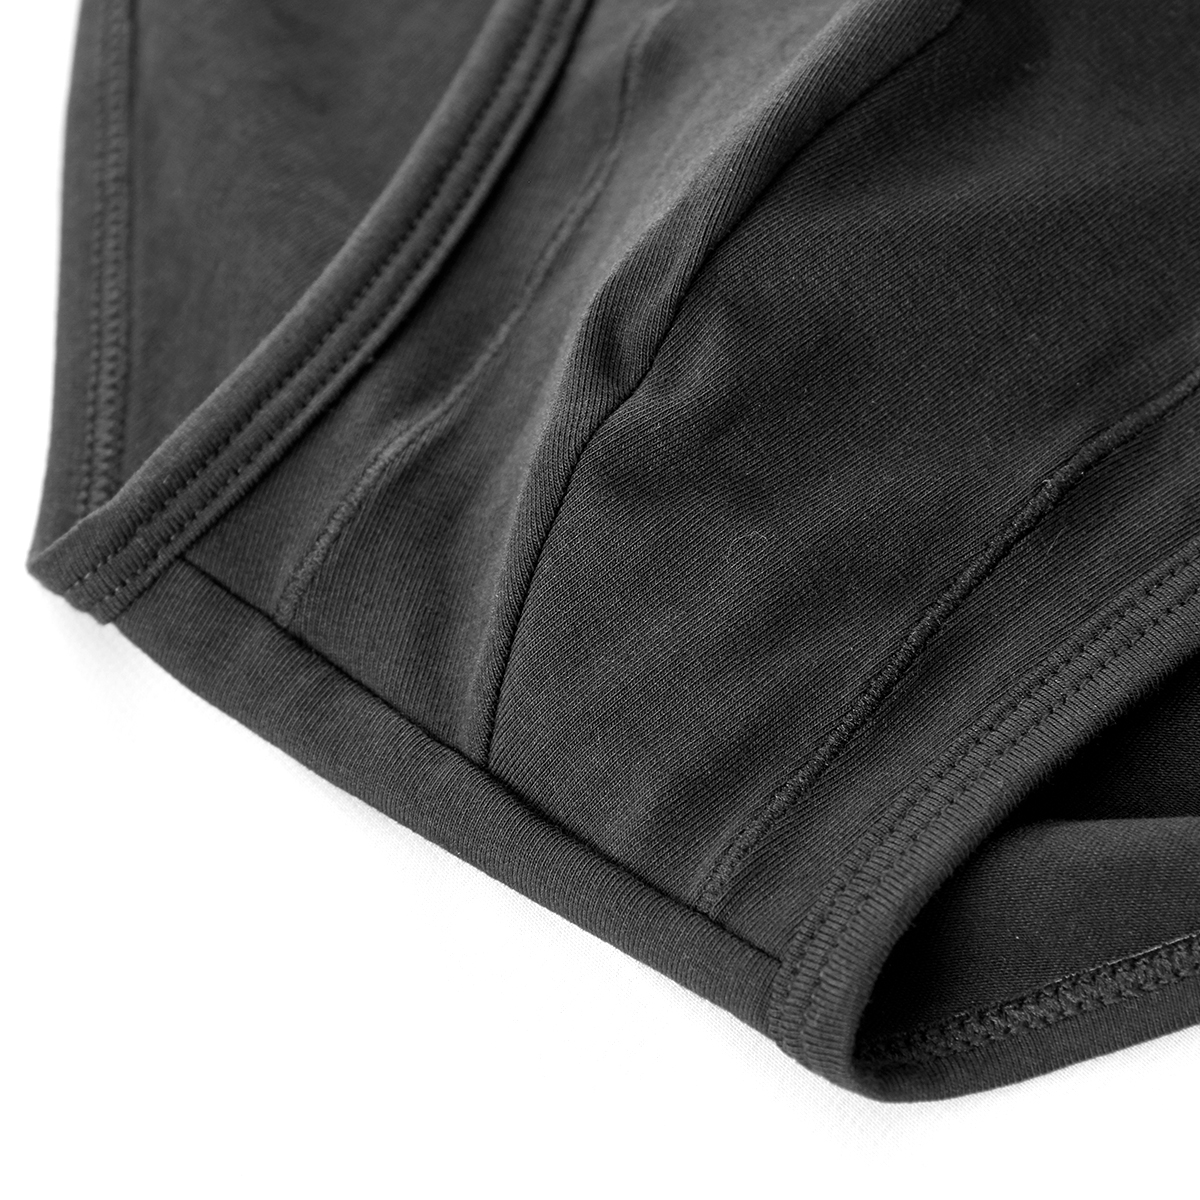 Combo 3 quần lót nam brief cotton USA iBasic PANM055